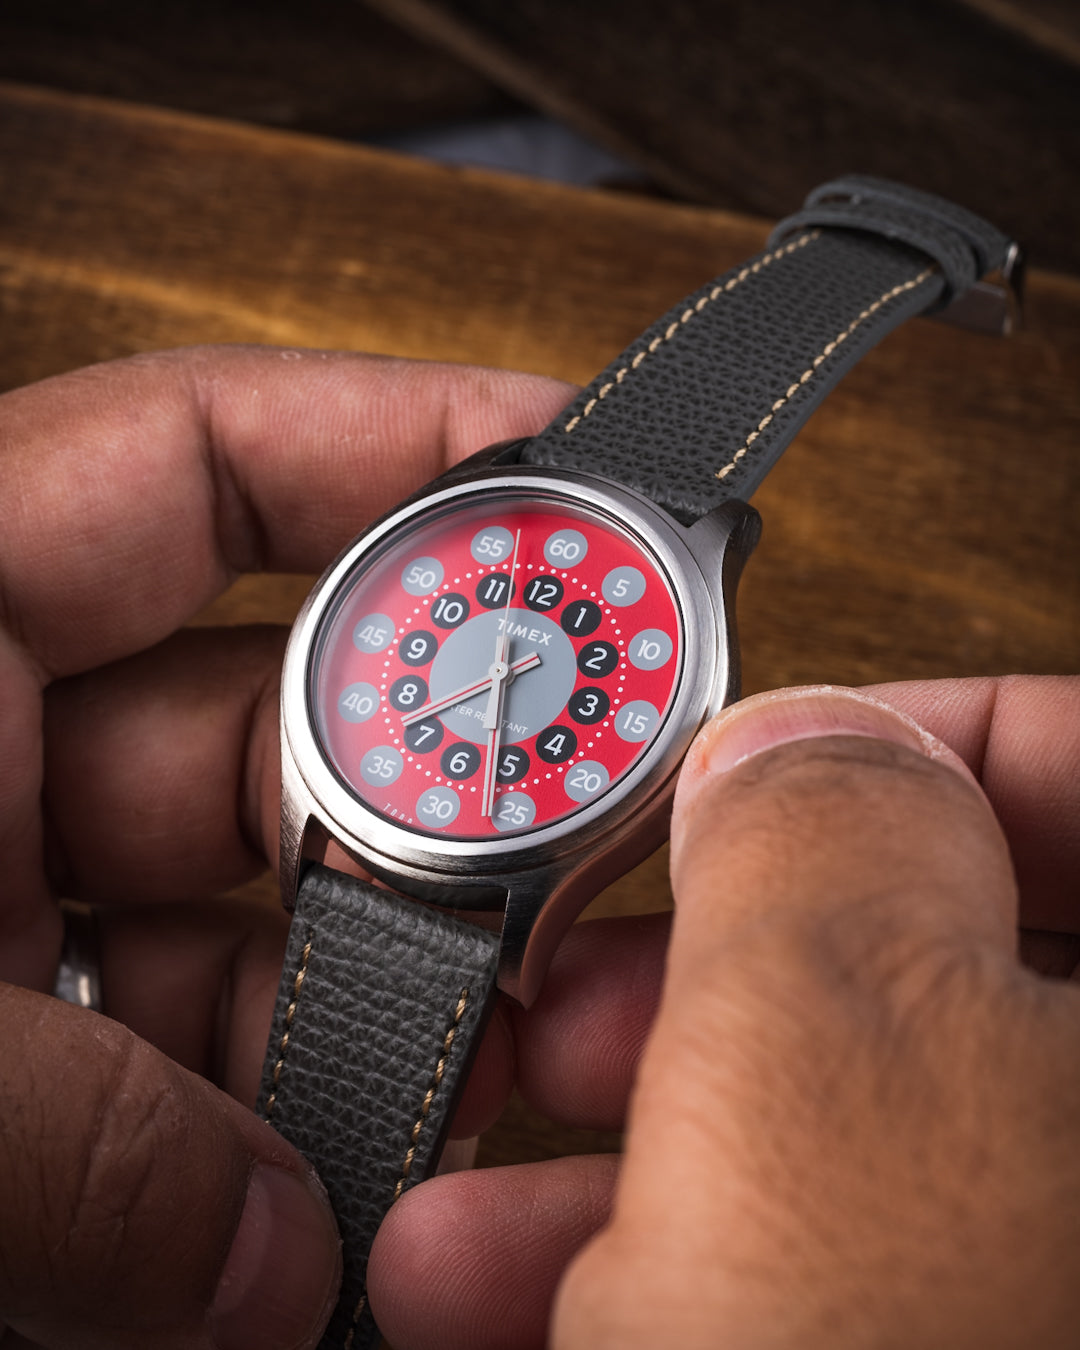 Timex todd snyder watch on vario leather watch strap